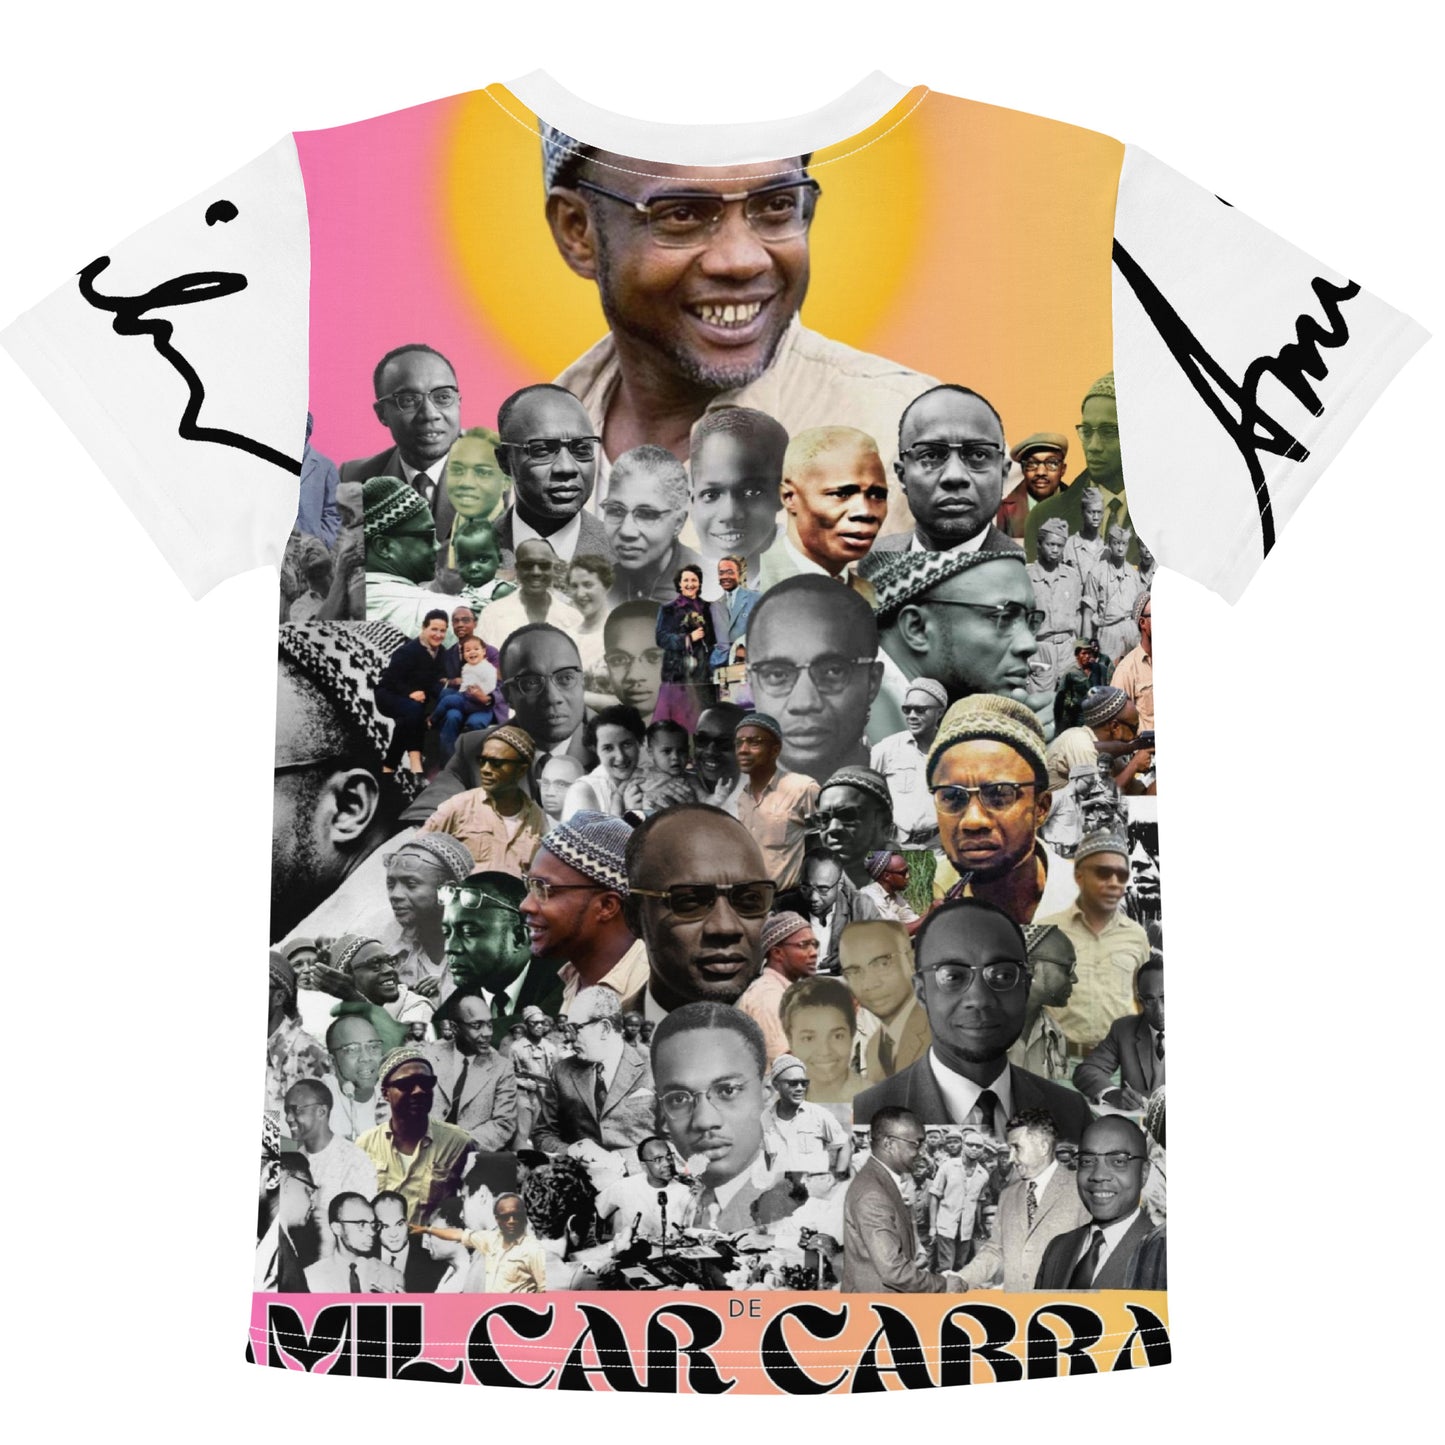 Amilcar Cabral CTN Kids crew neck t-shirt